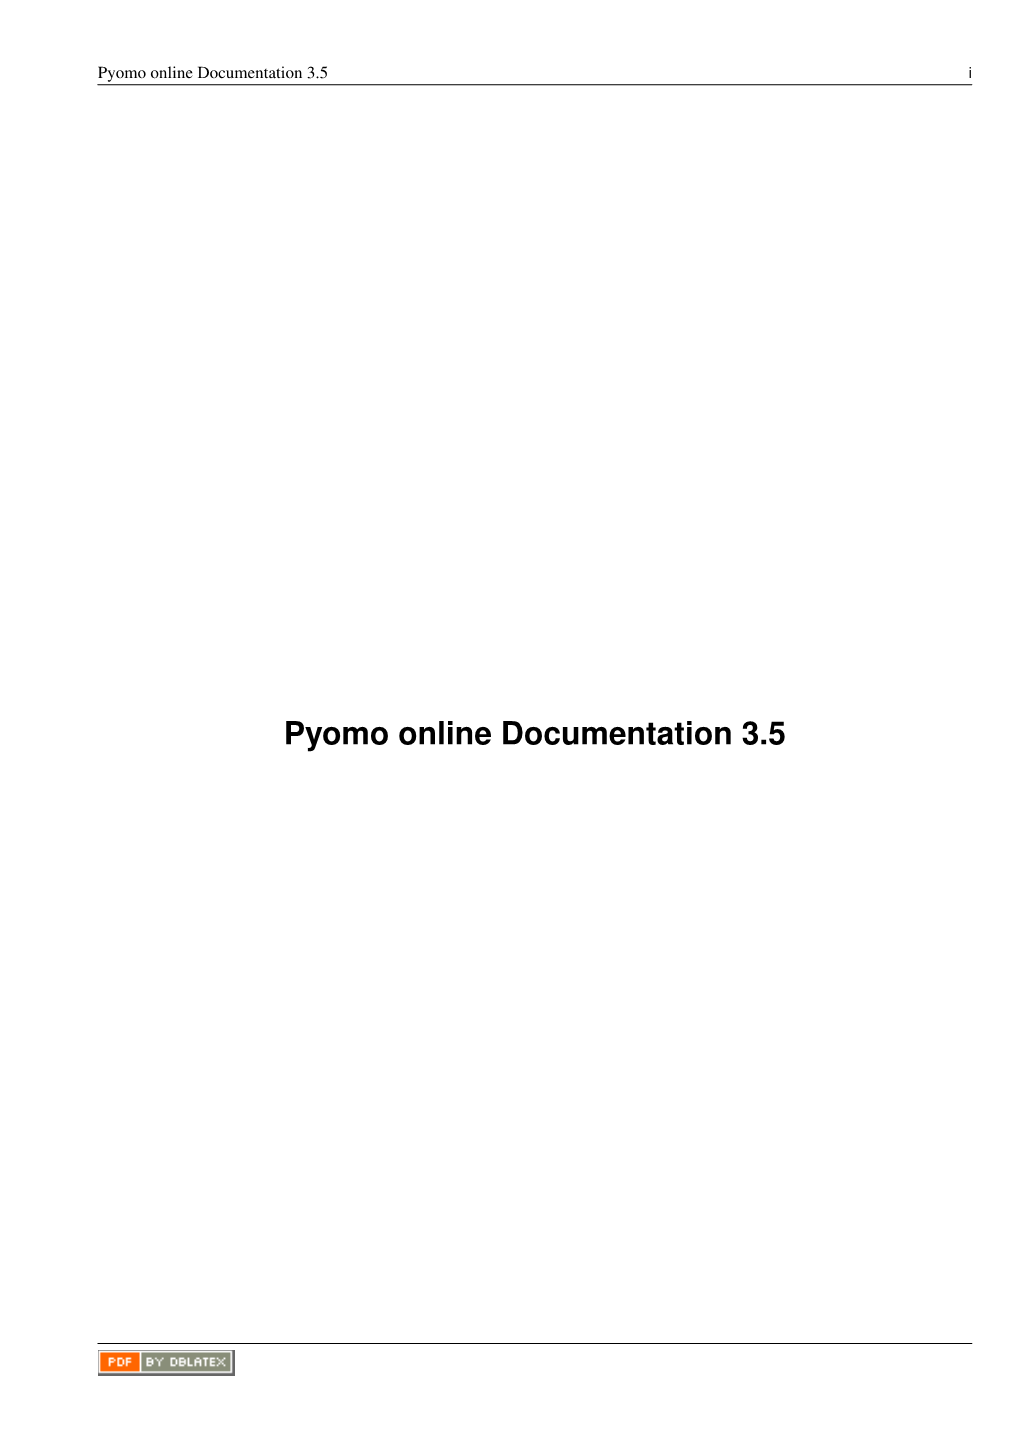 Pyomo Online Documentation 3.5 I